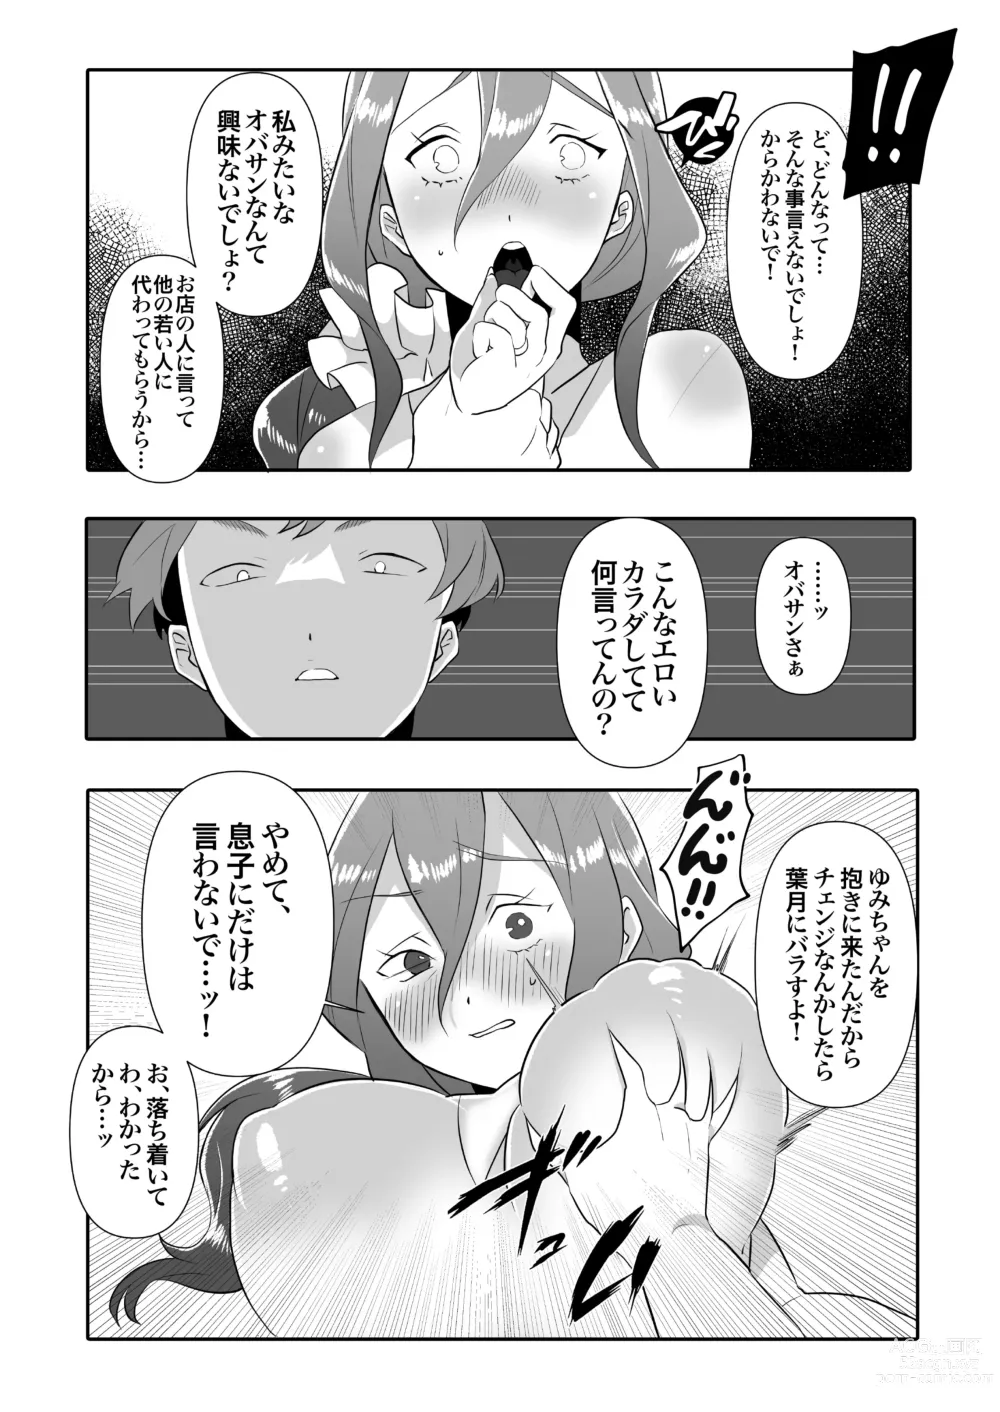 Page 10 of doujinshi DeliHeal Yondara Tomodachi no Kaa-chan ga Kita.